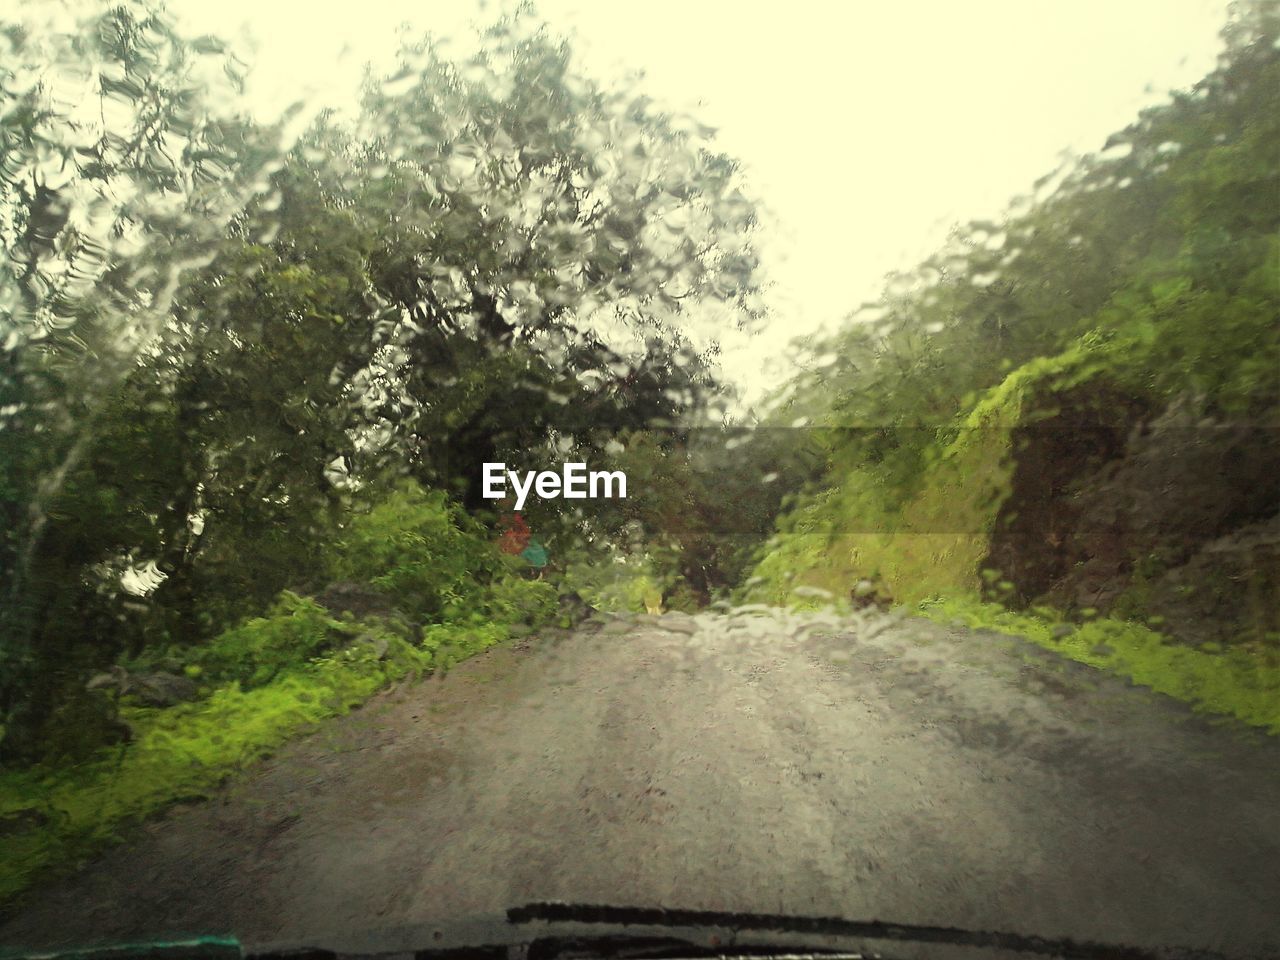 Road seen through wet windshield